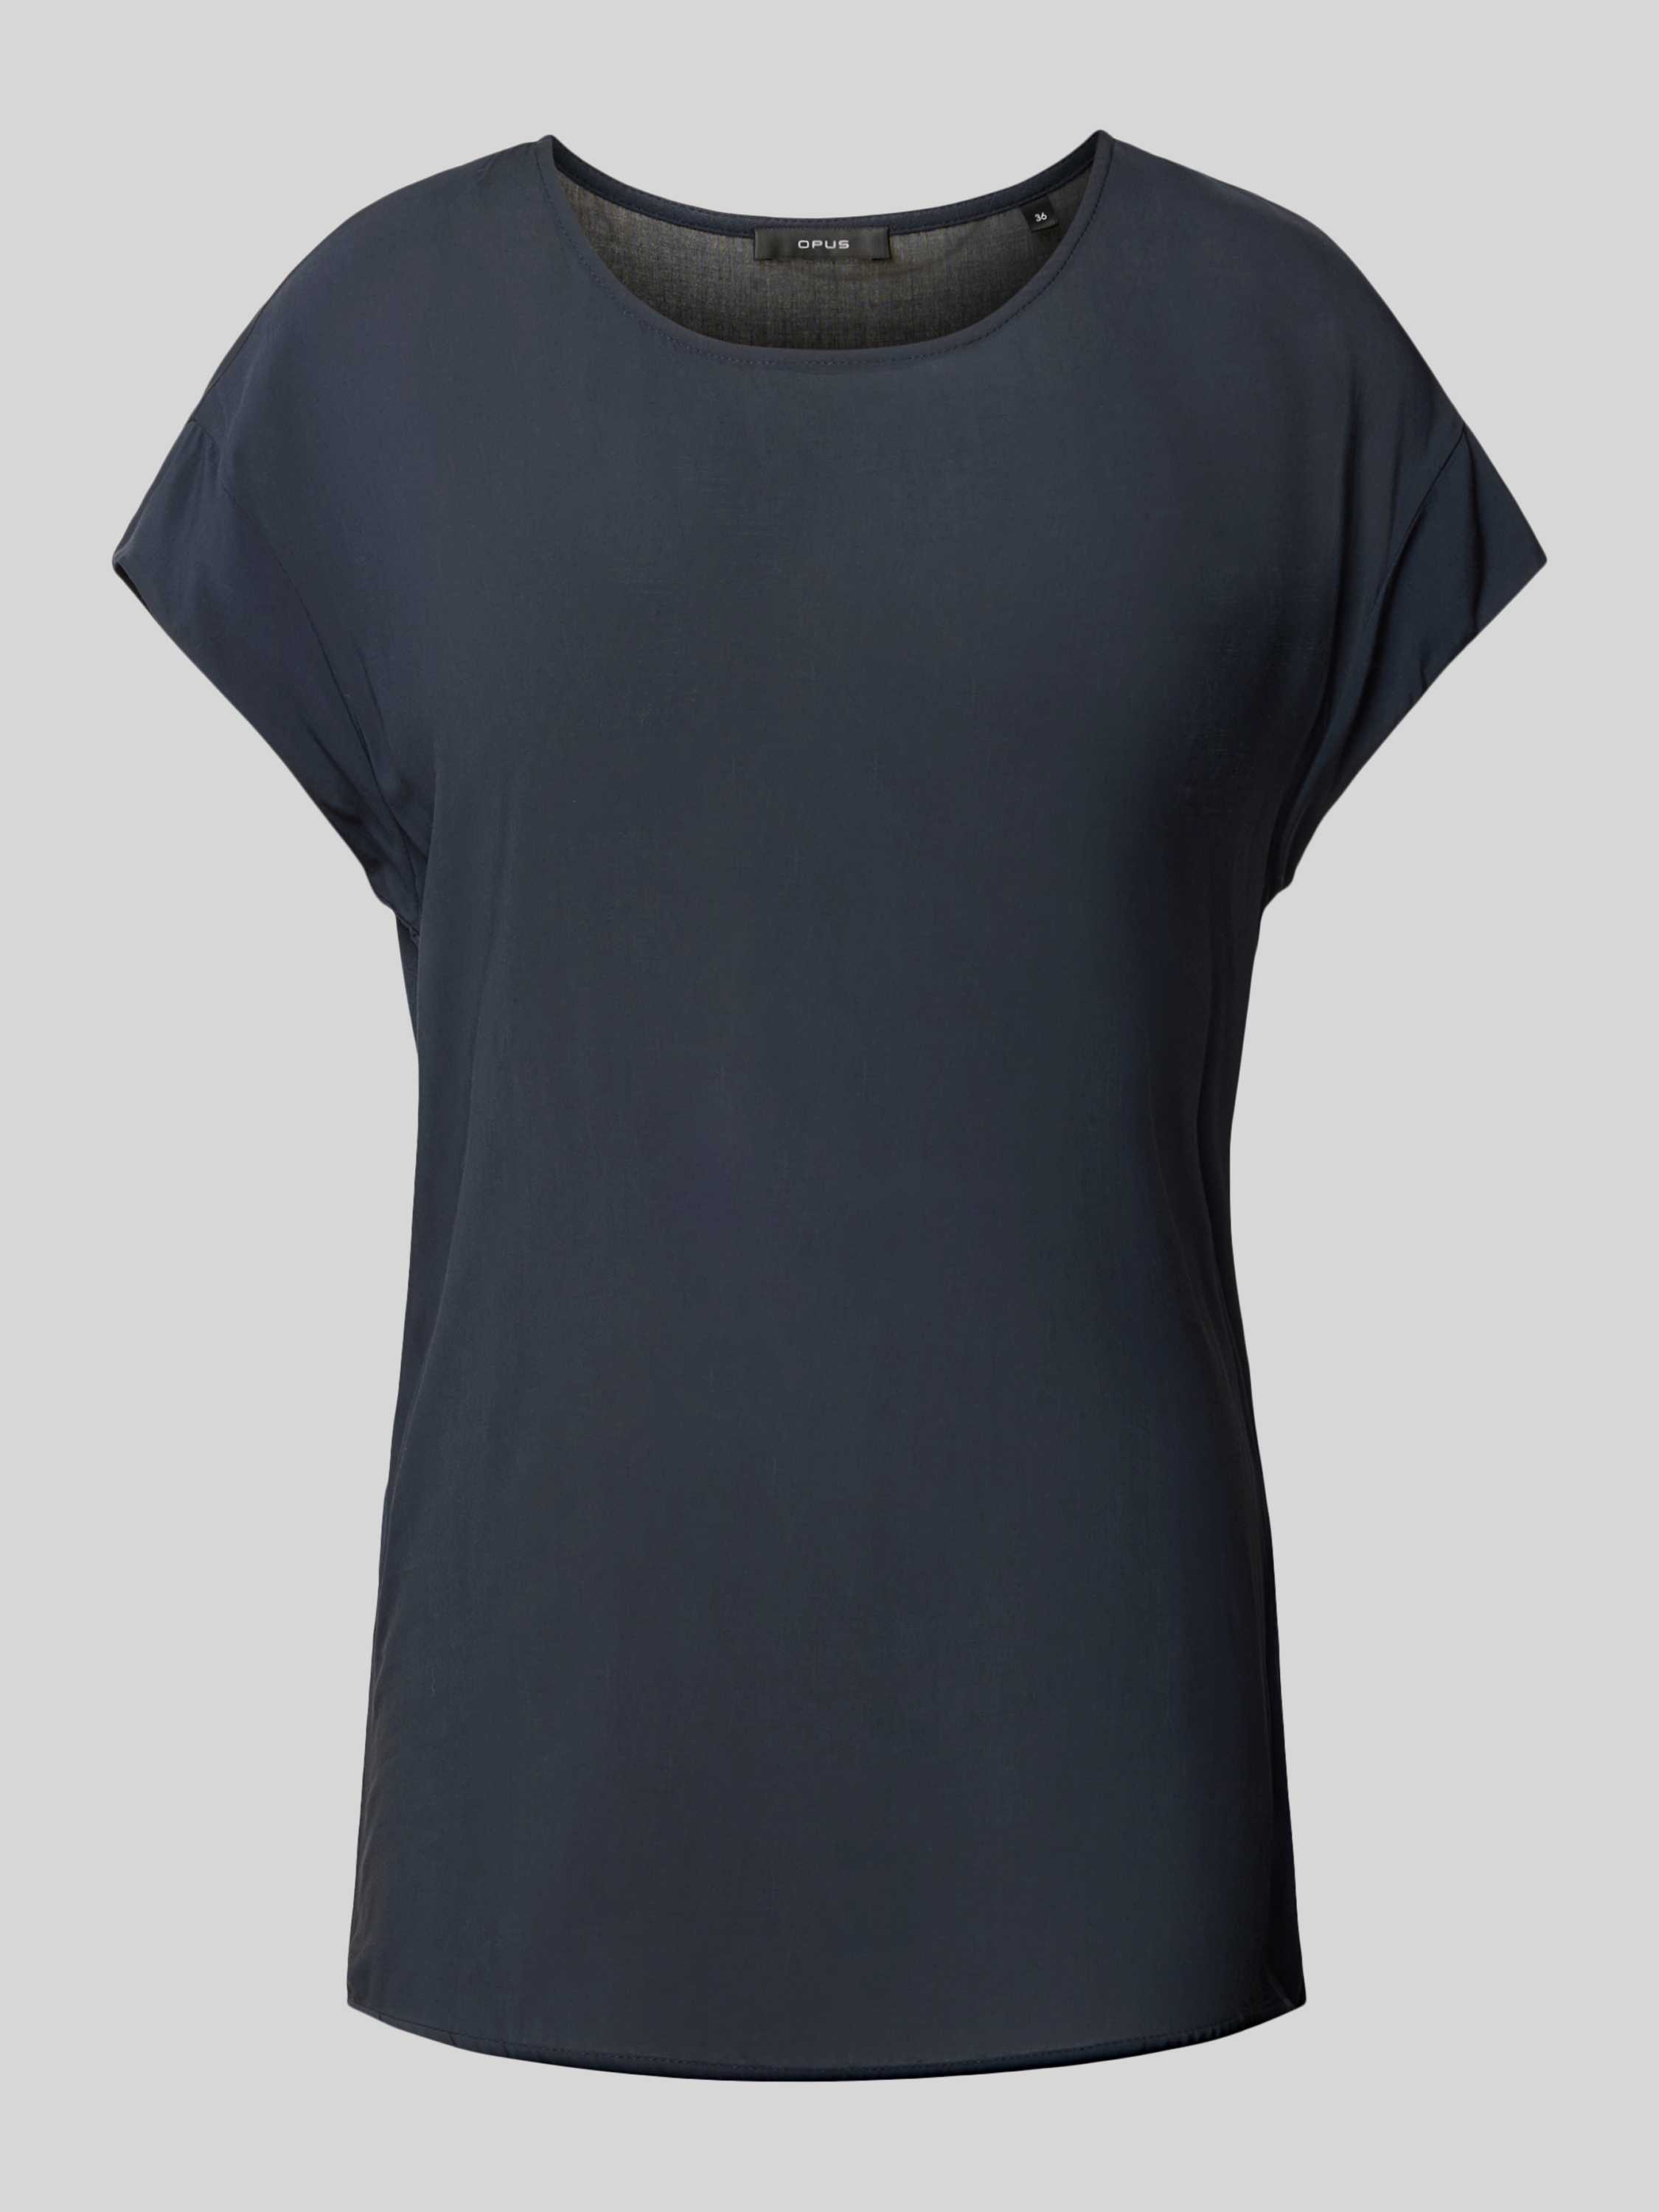 T-Shirt aus Viskose in unifarbenem Design Modell 'Skita soft'